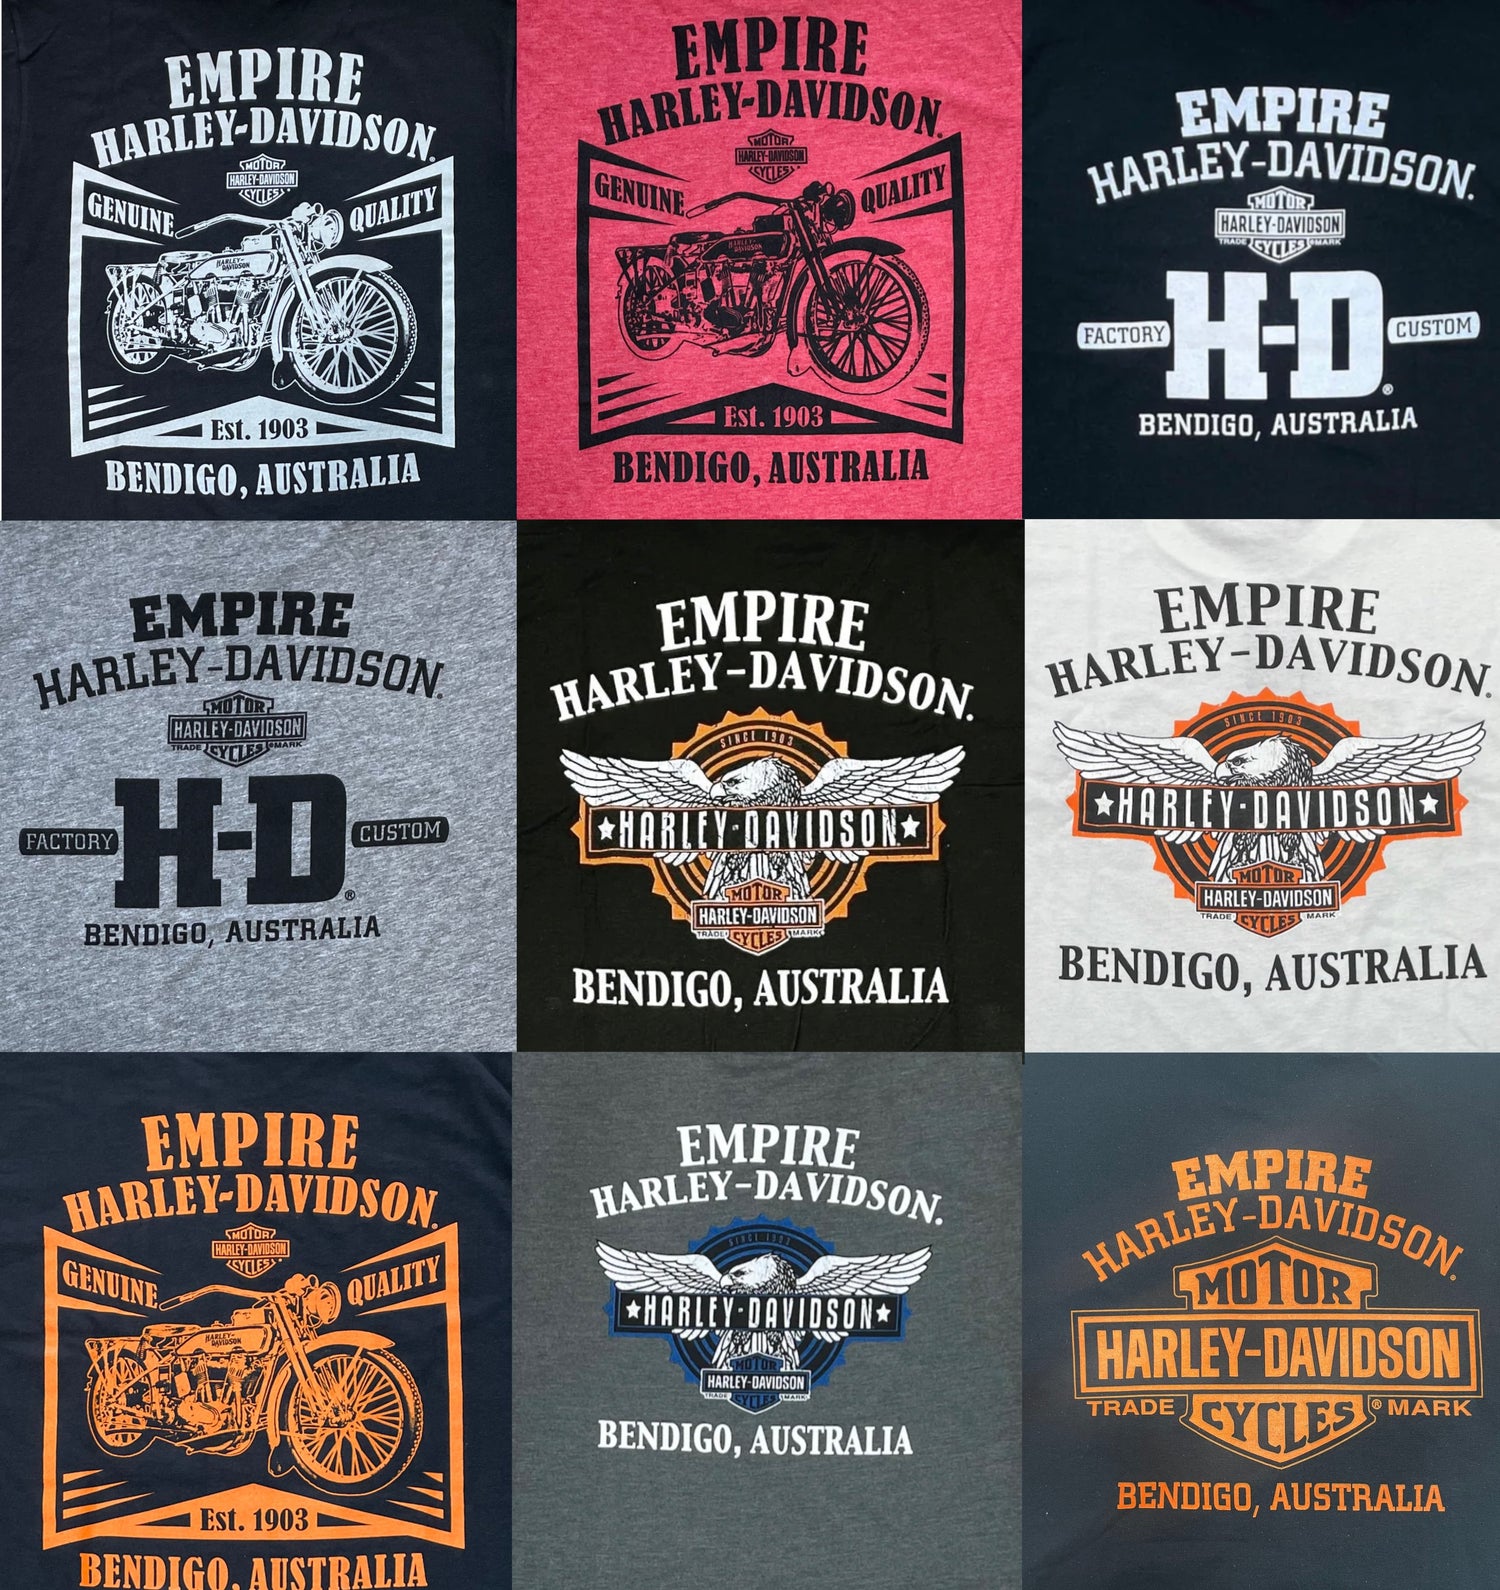 Empire Harley-Davidson Merch